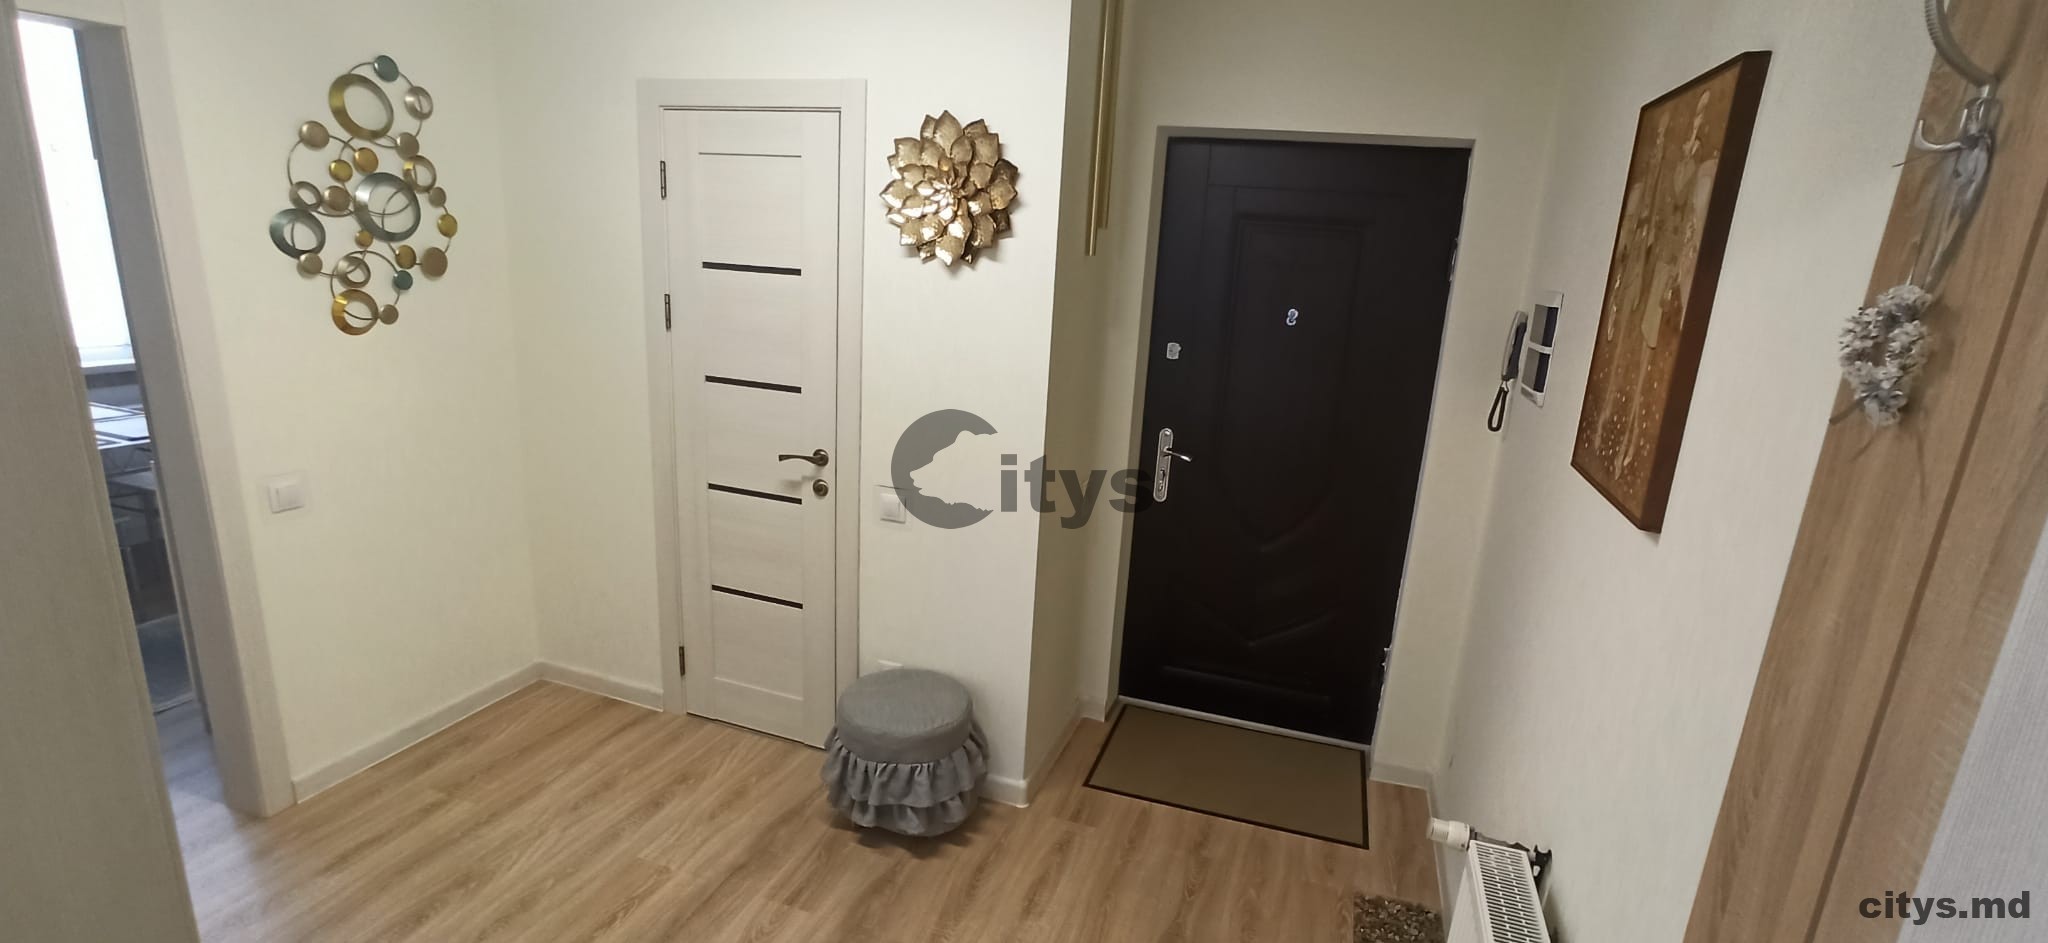 apartament cu 1 cameră, 47m², Moldova, Chișinău, strada Ciocârliei photo 1